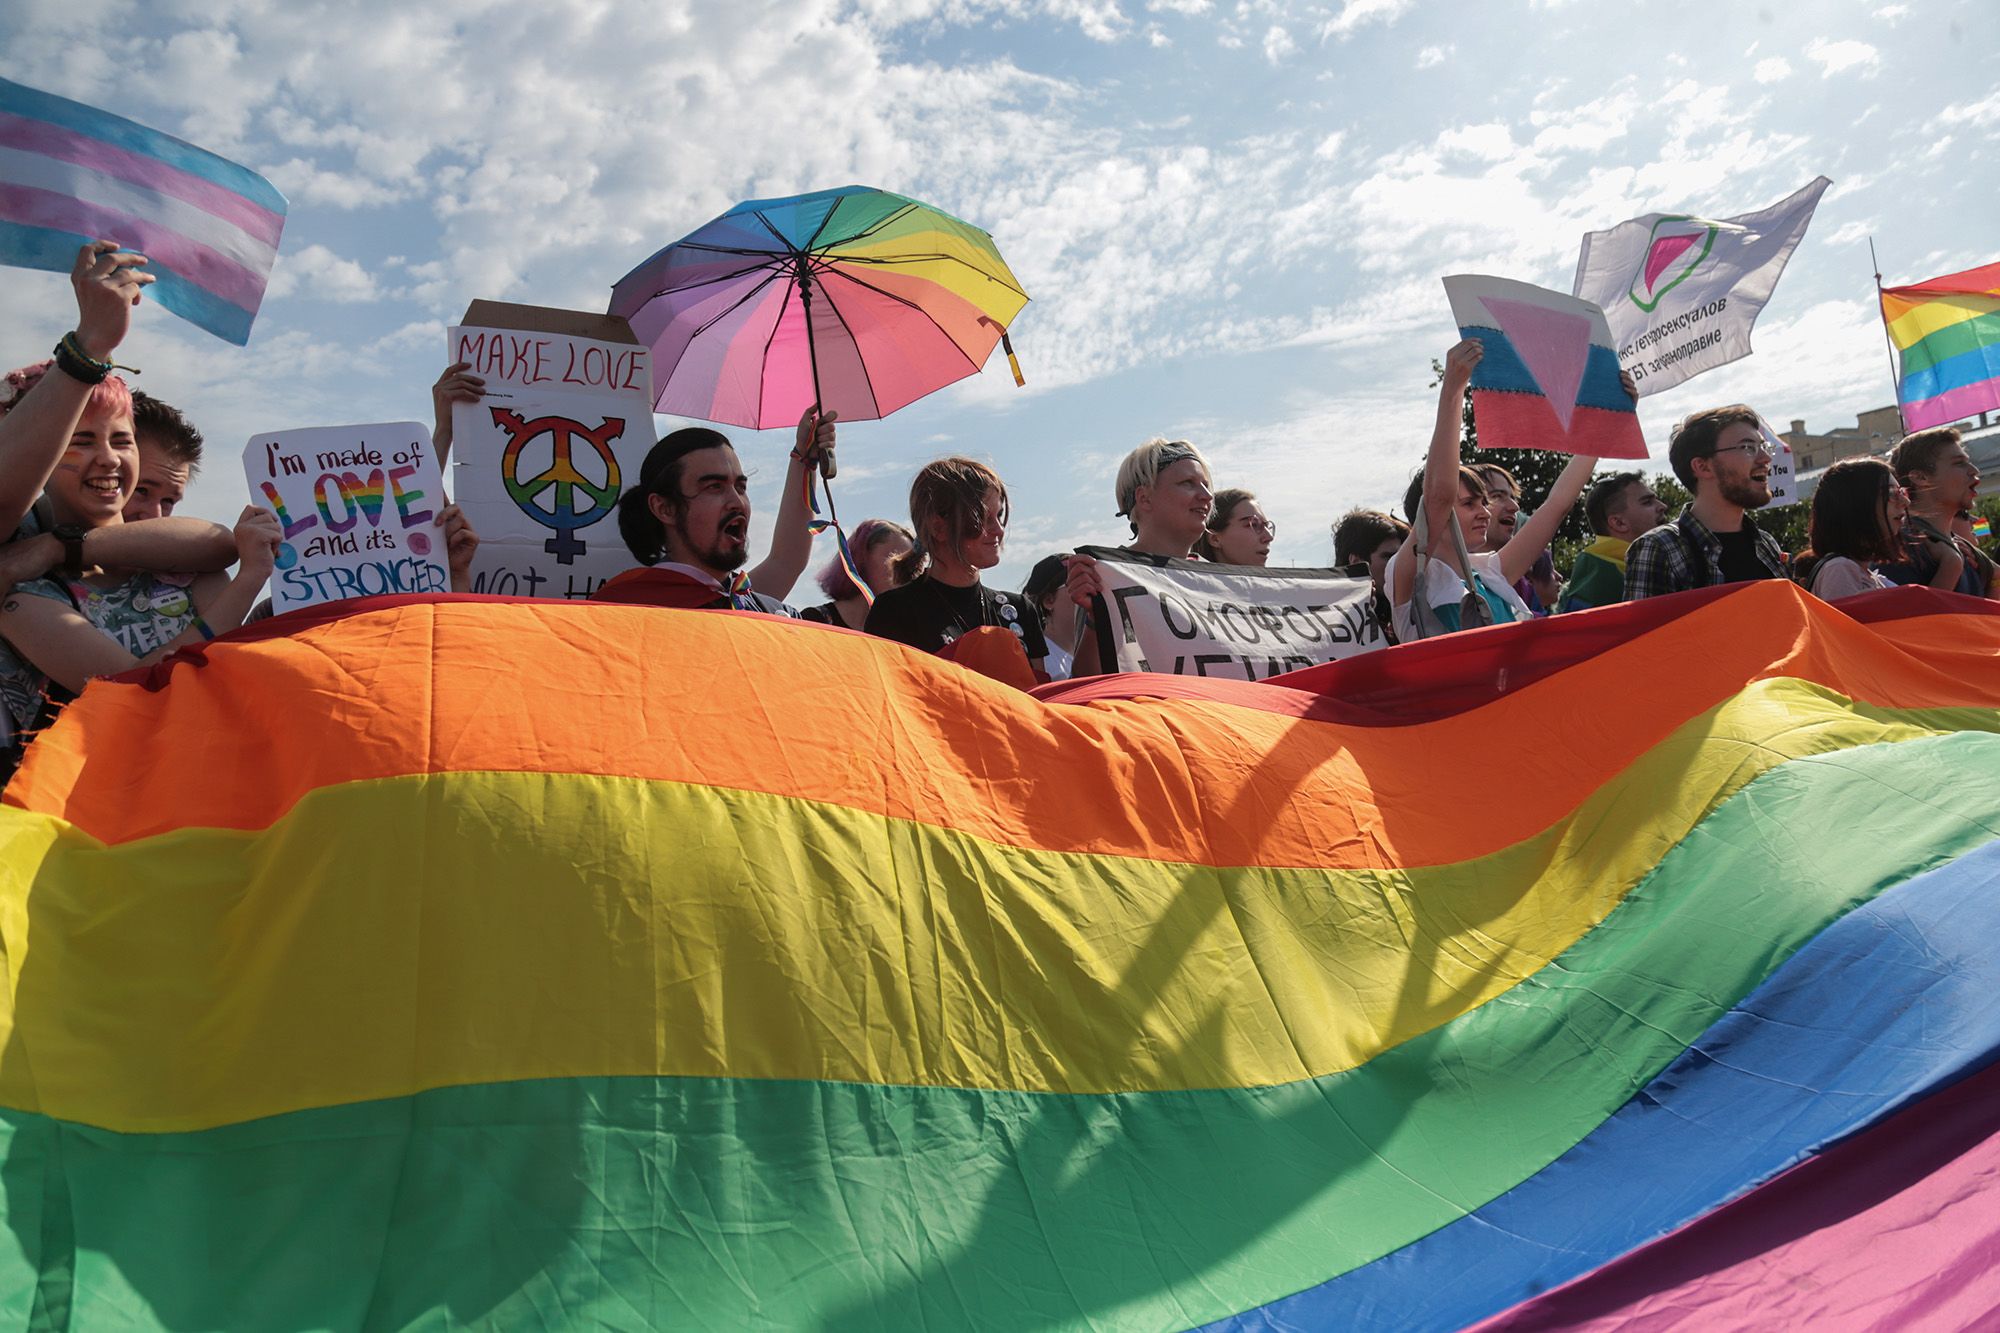 Russian Parliament Passes Law Banning 'LGBT Propaganda'